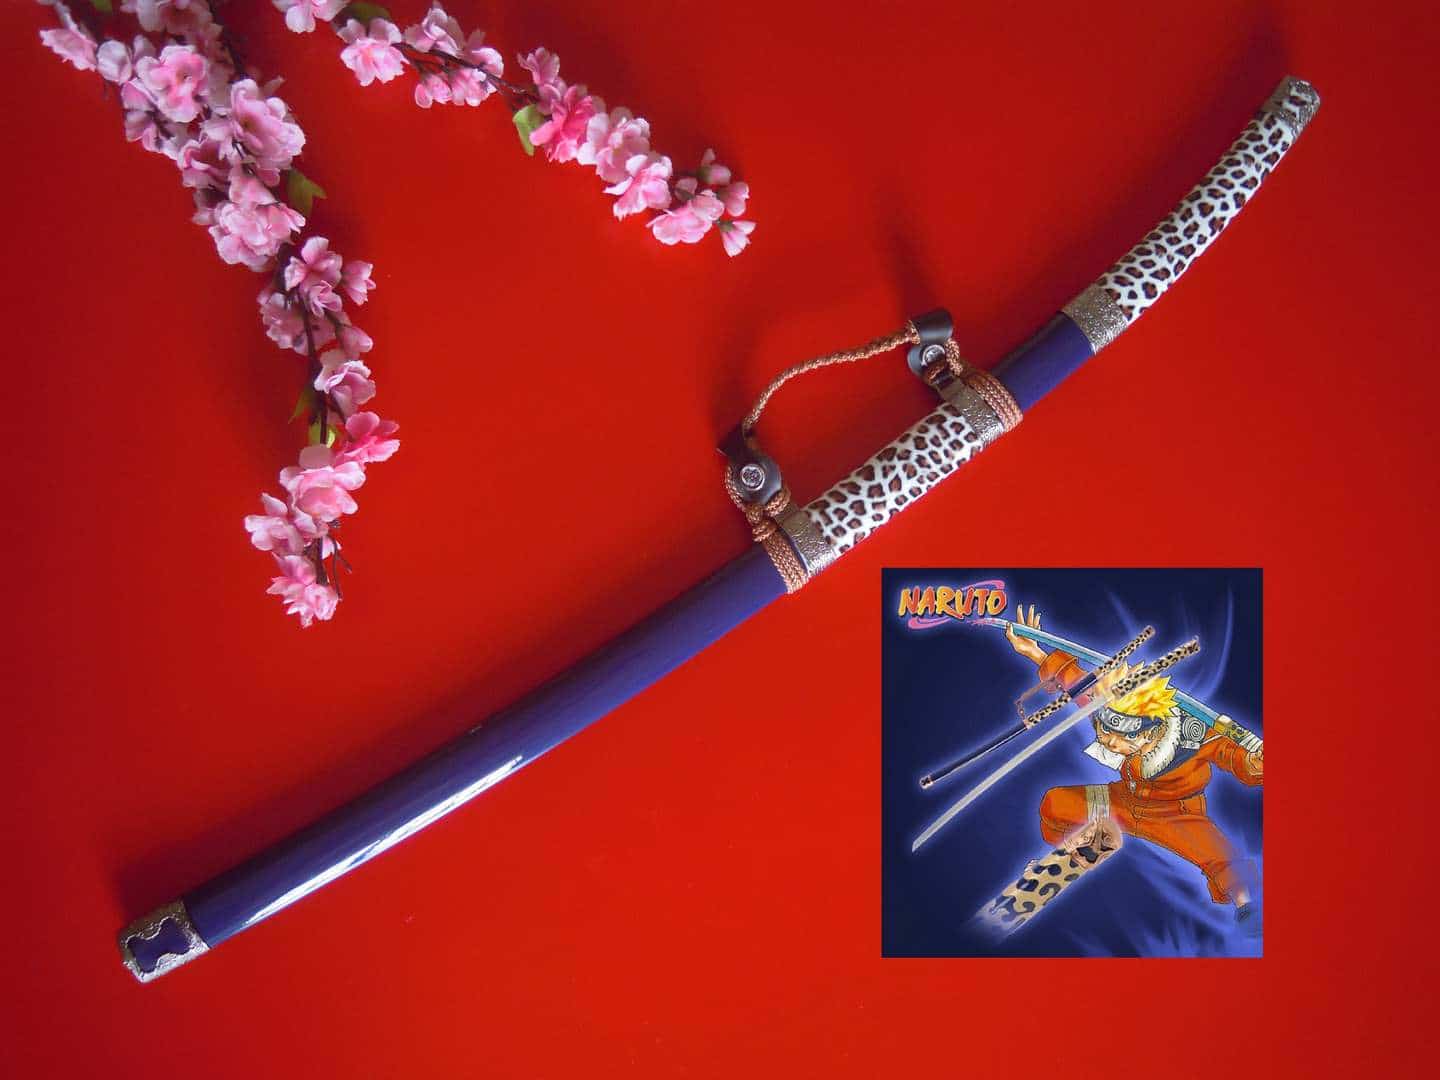 Naruto sword | Katana & Swords Factory in Malaysia